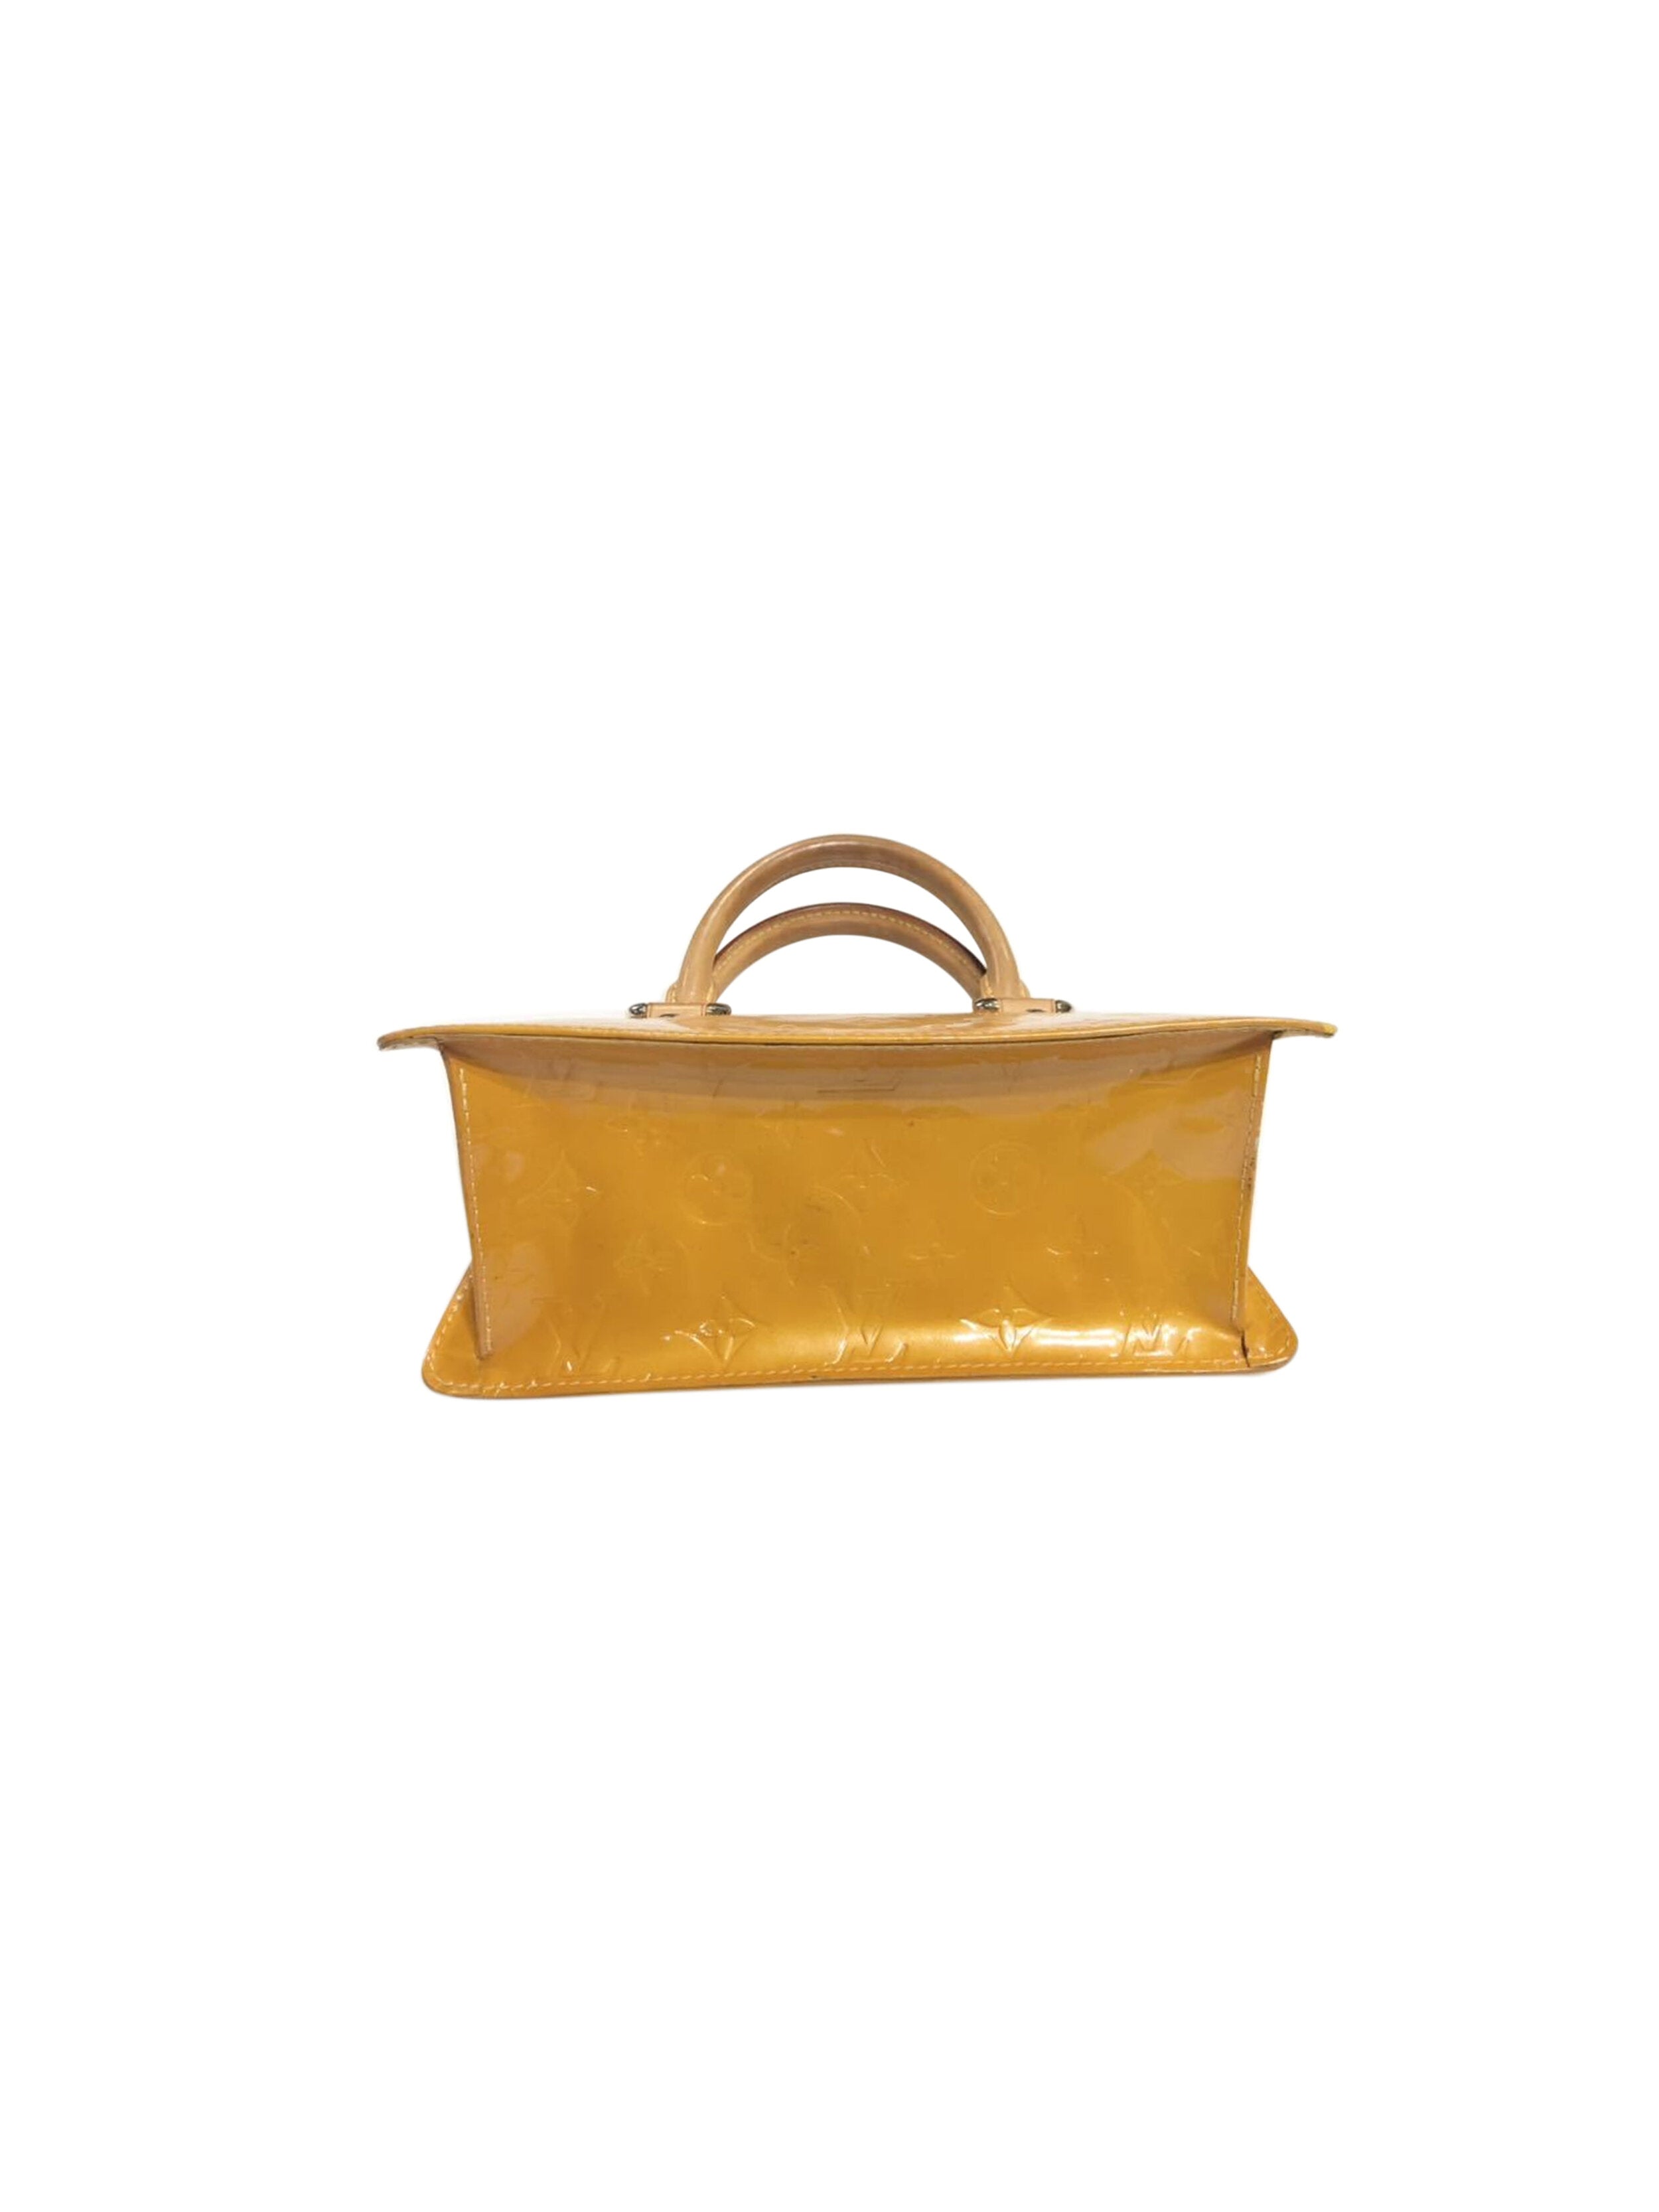 Louis Vuitton 2000s Vernis Yellow Forsyth Bag · INTO